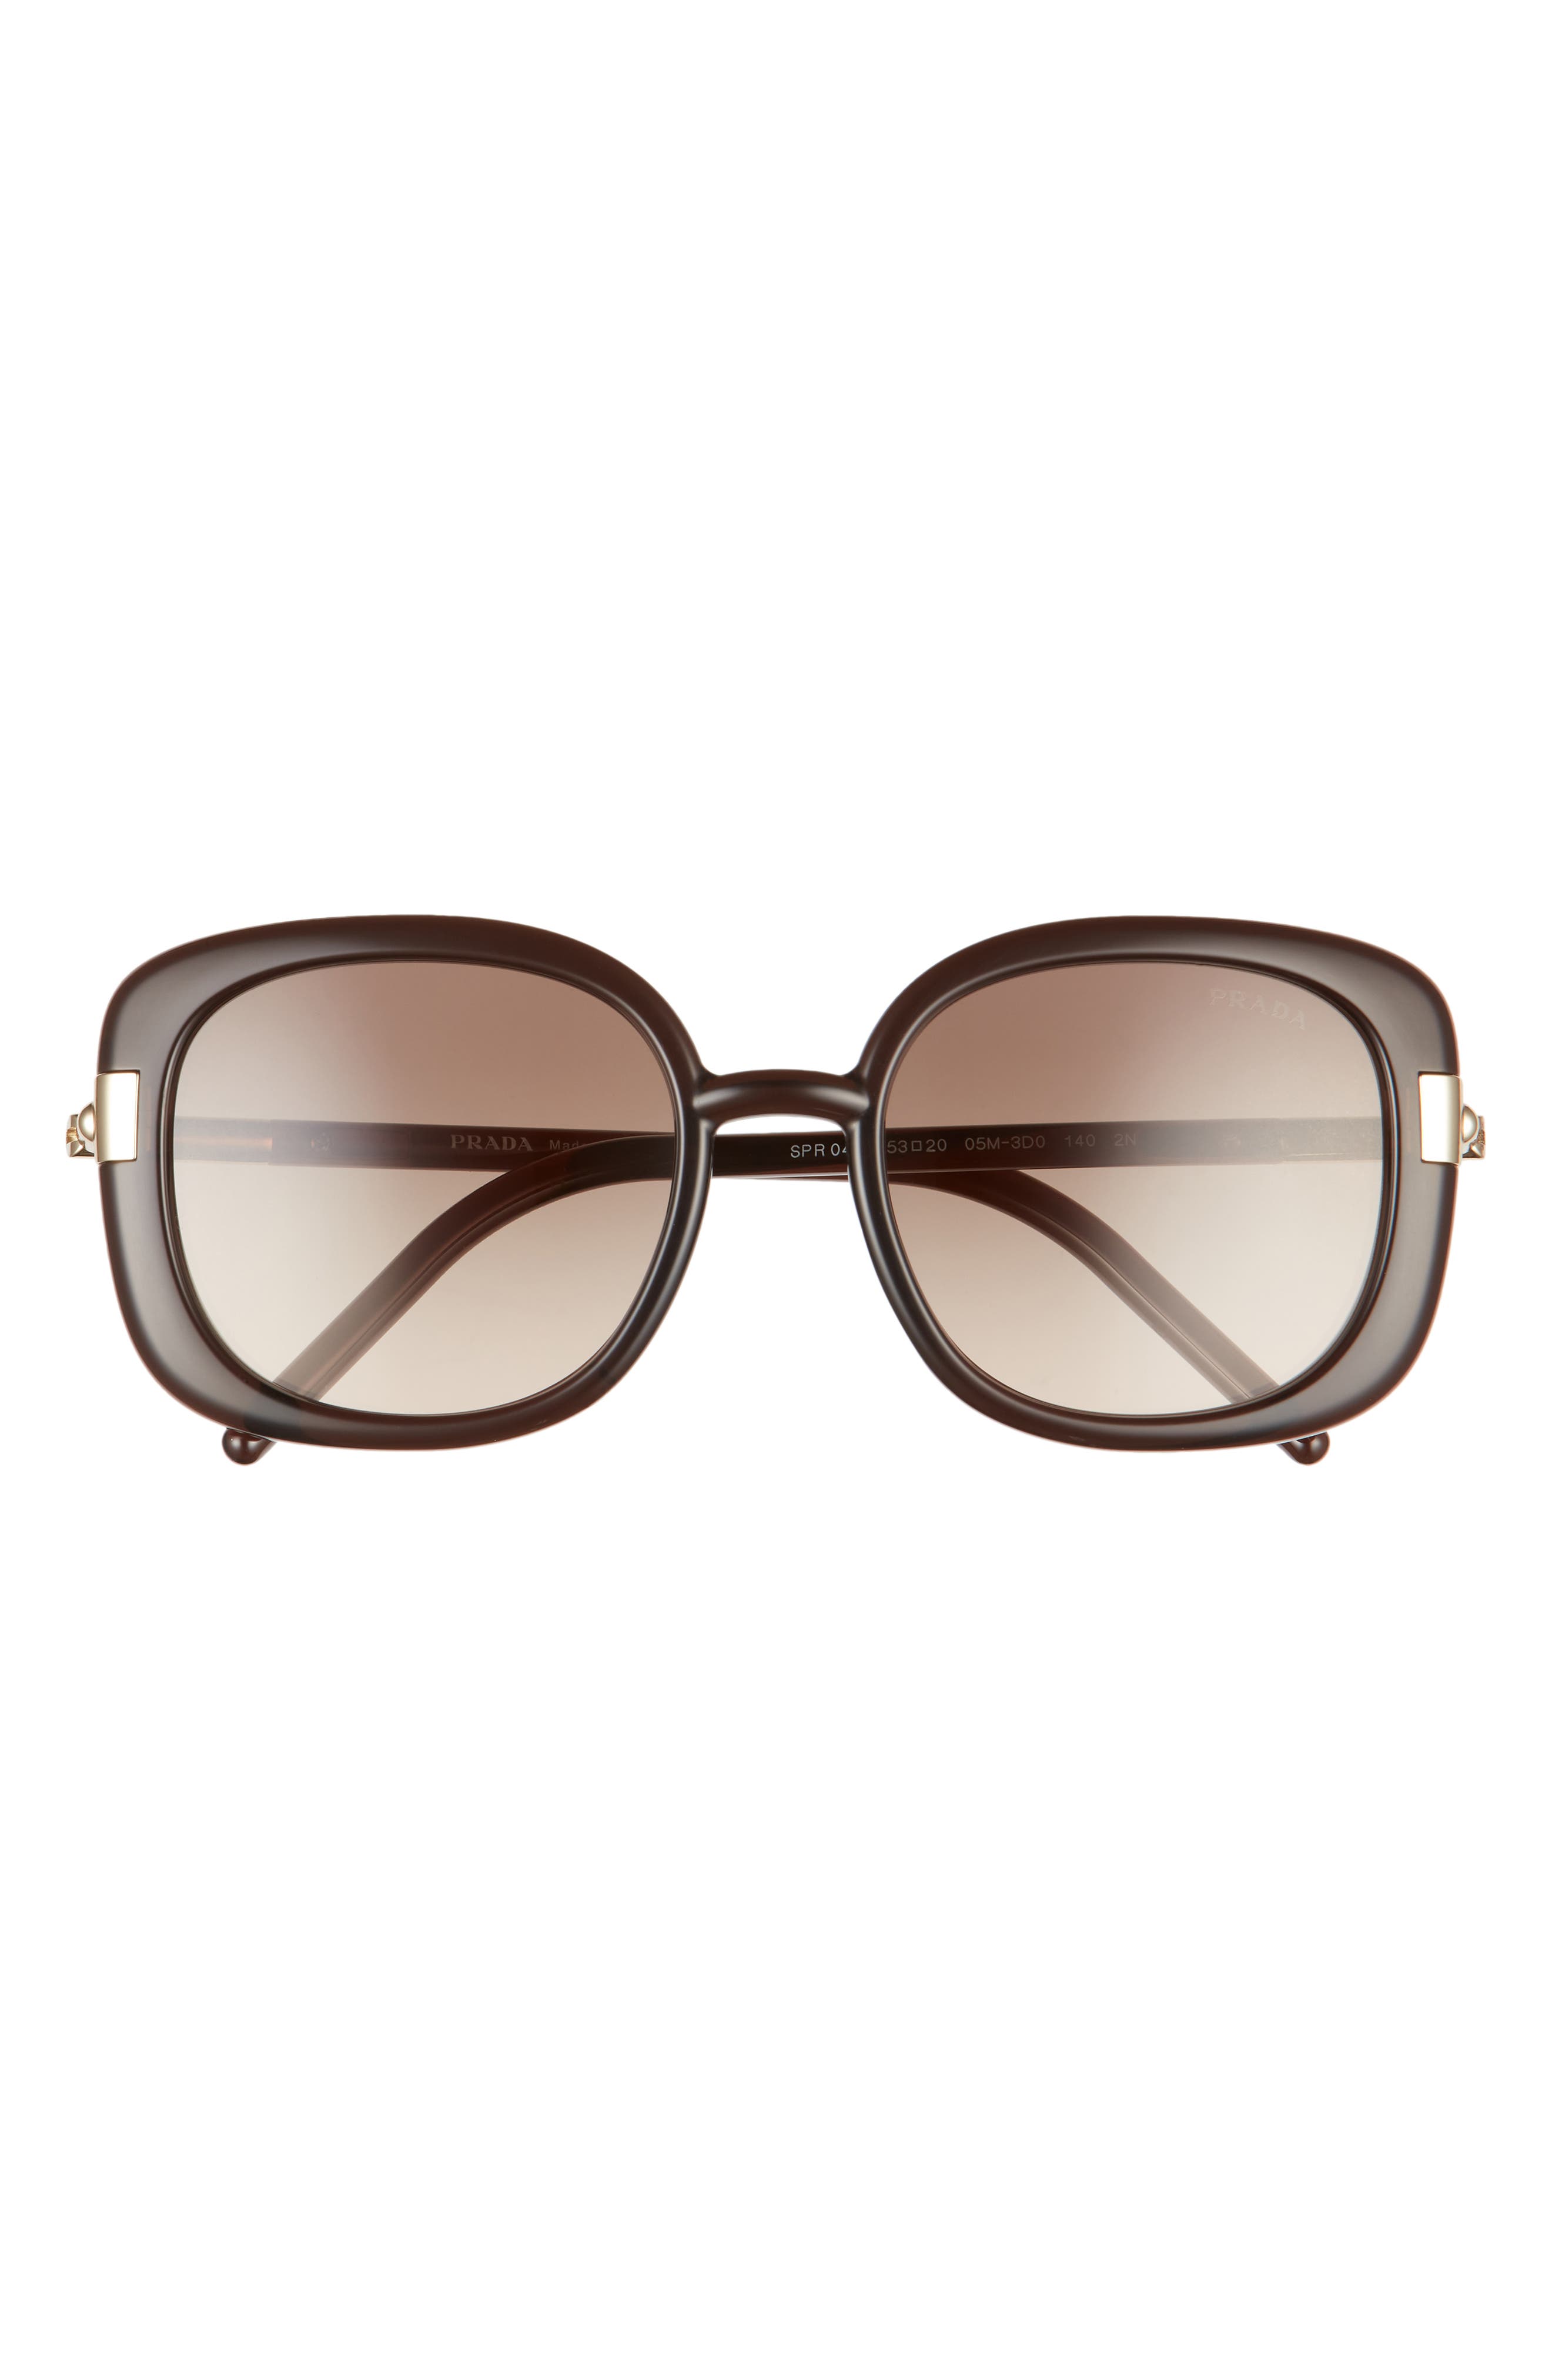 Prada Pillow 53mm Gradient Round Sunglasses in Dark Brown Crystal/Brown Grey at Nordstrom